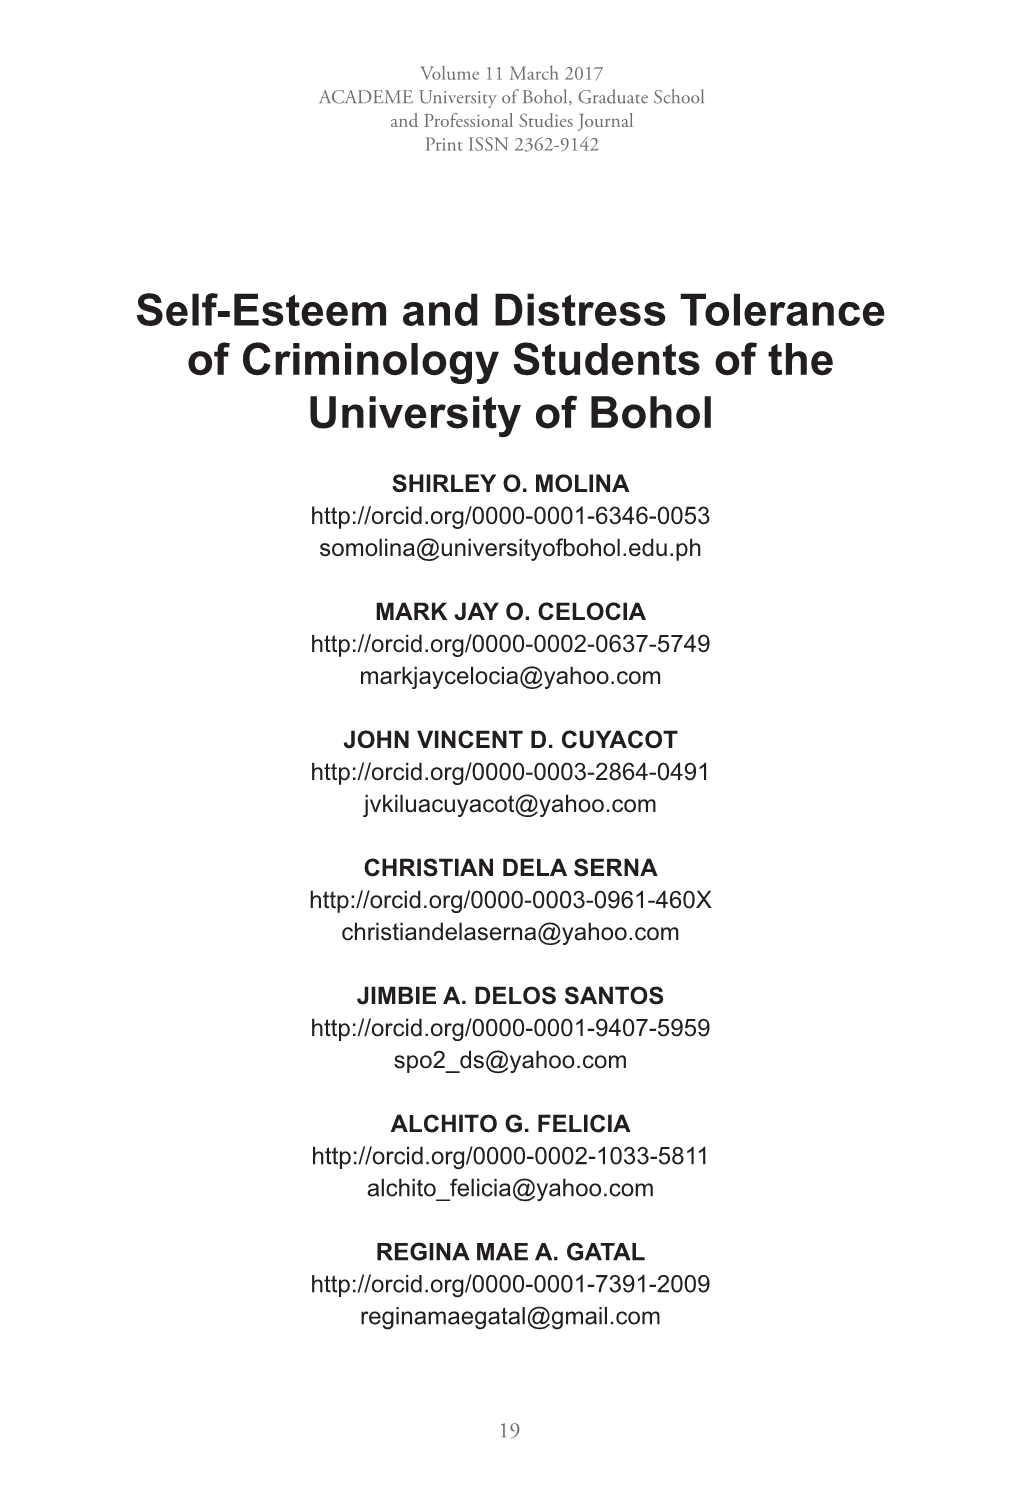 Self-Esteem and Distress Tolerance of Criminology Students of the University of Bohol